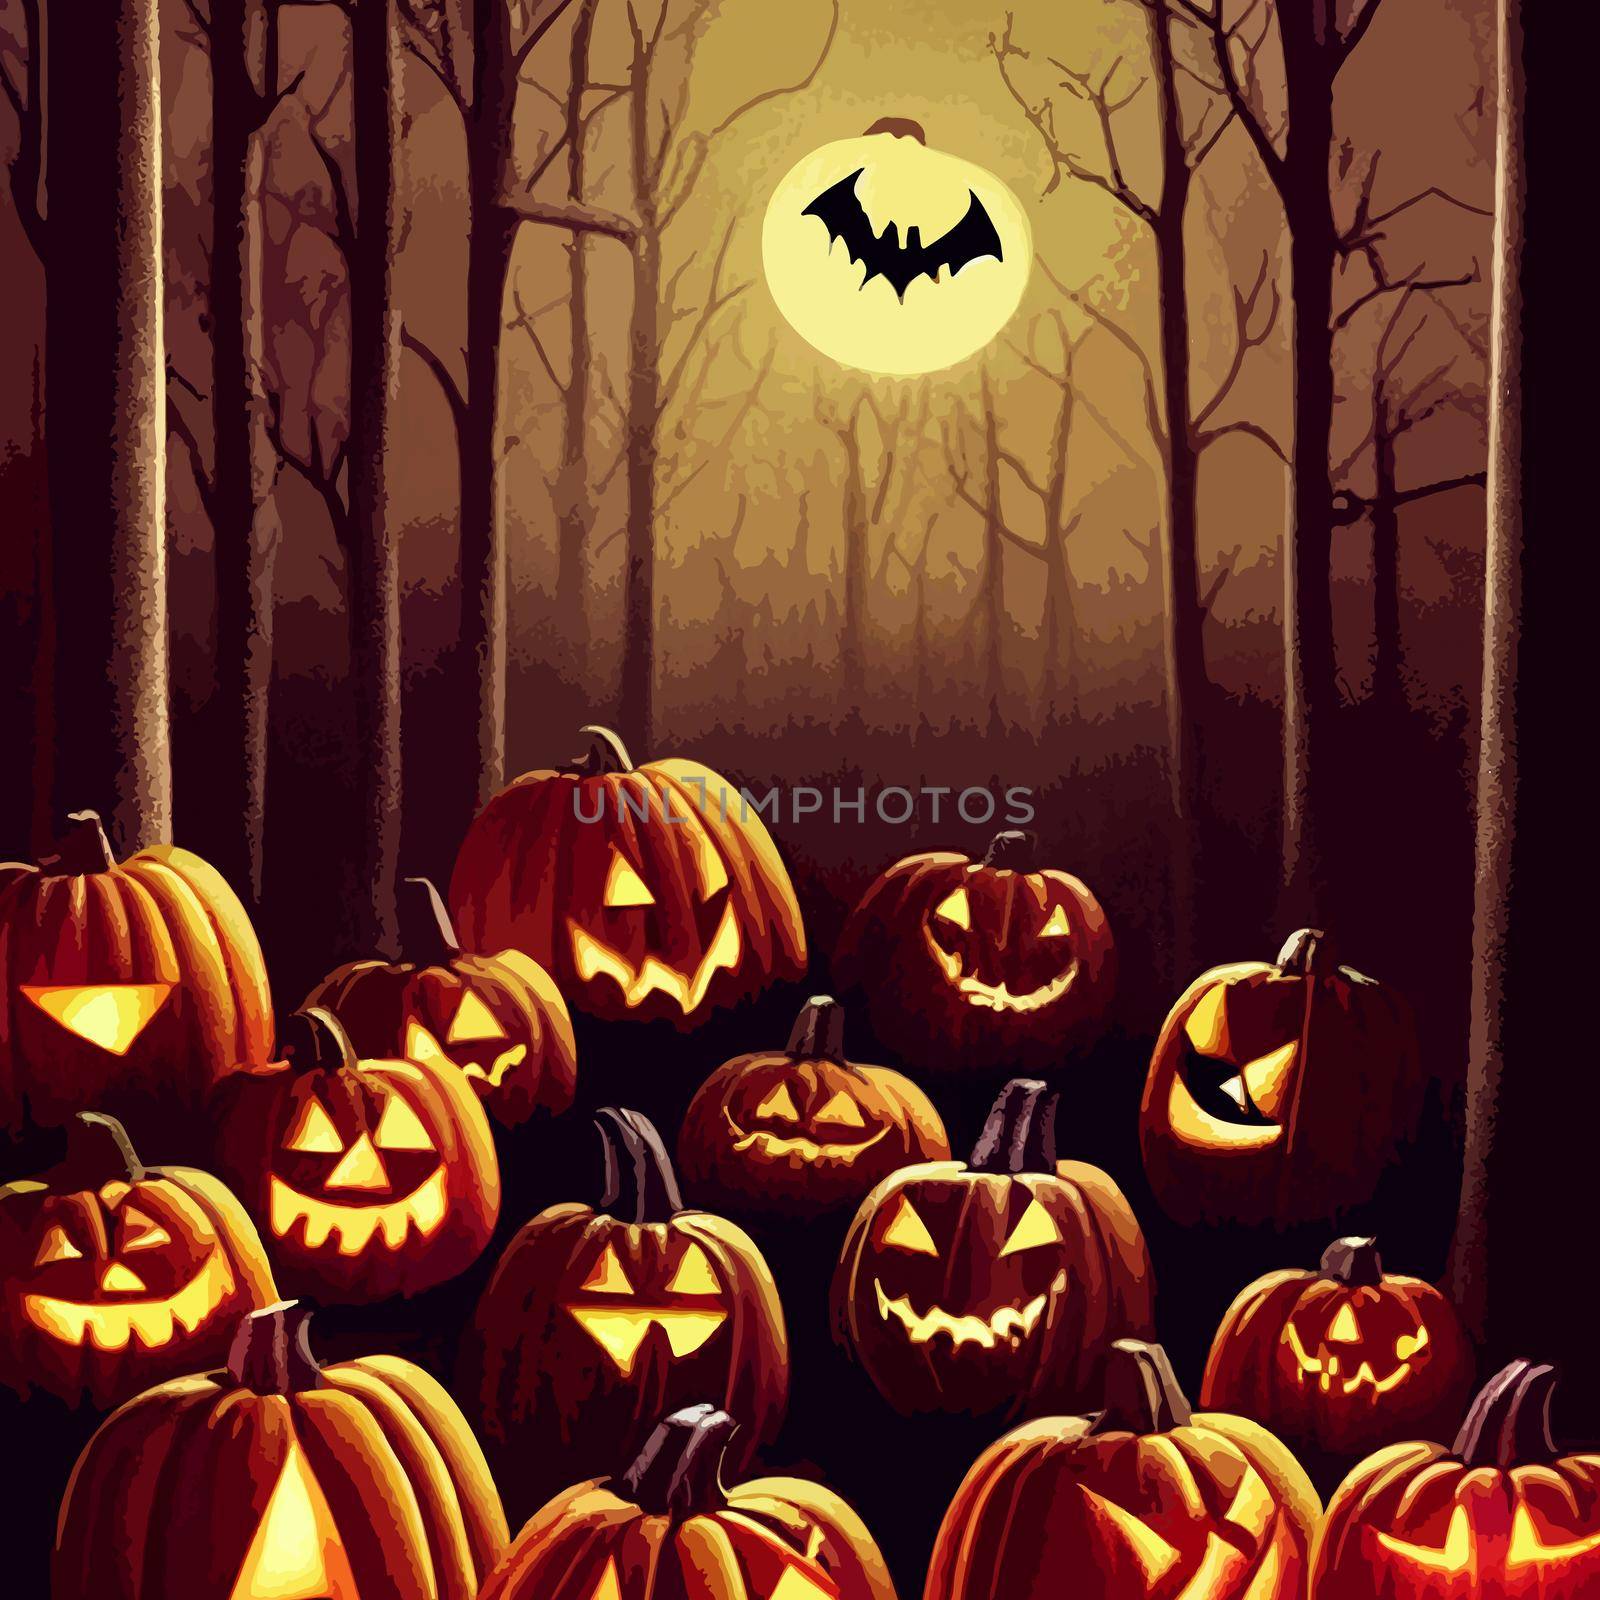 halloween evil pumpkin illustration. halloween pumpkin.